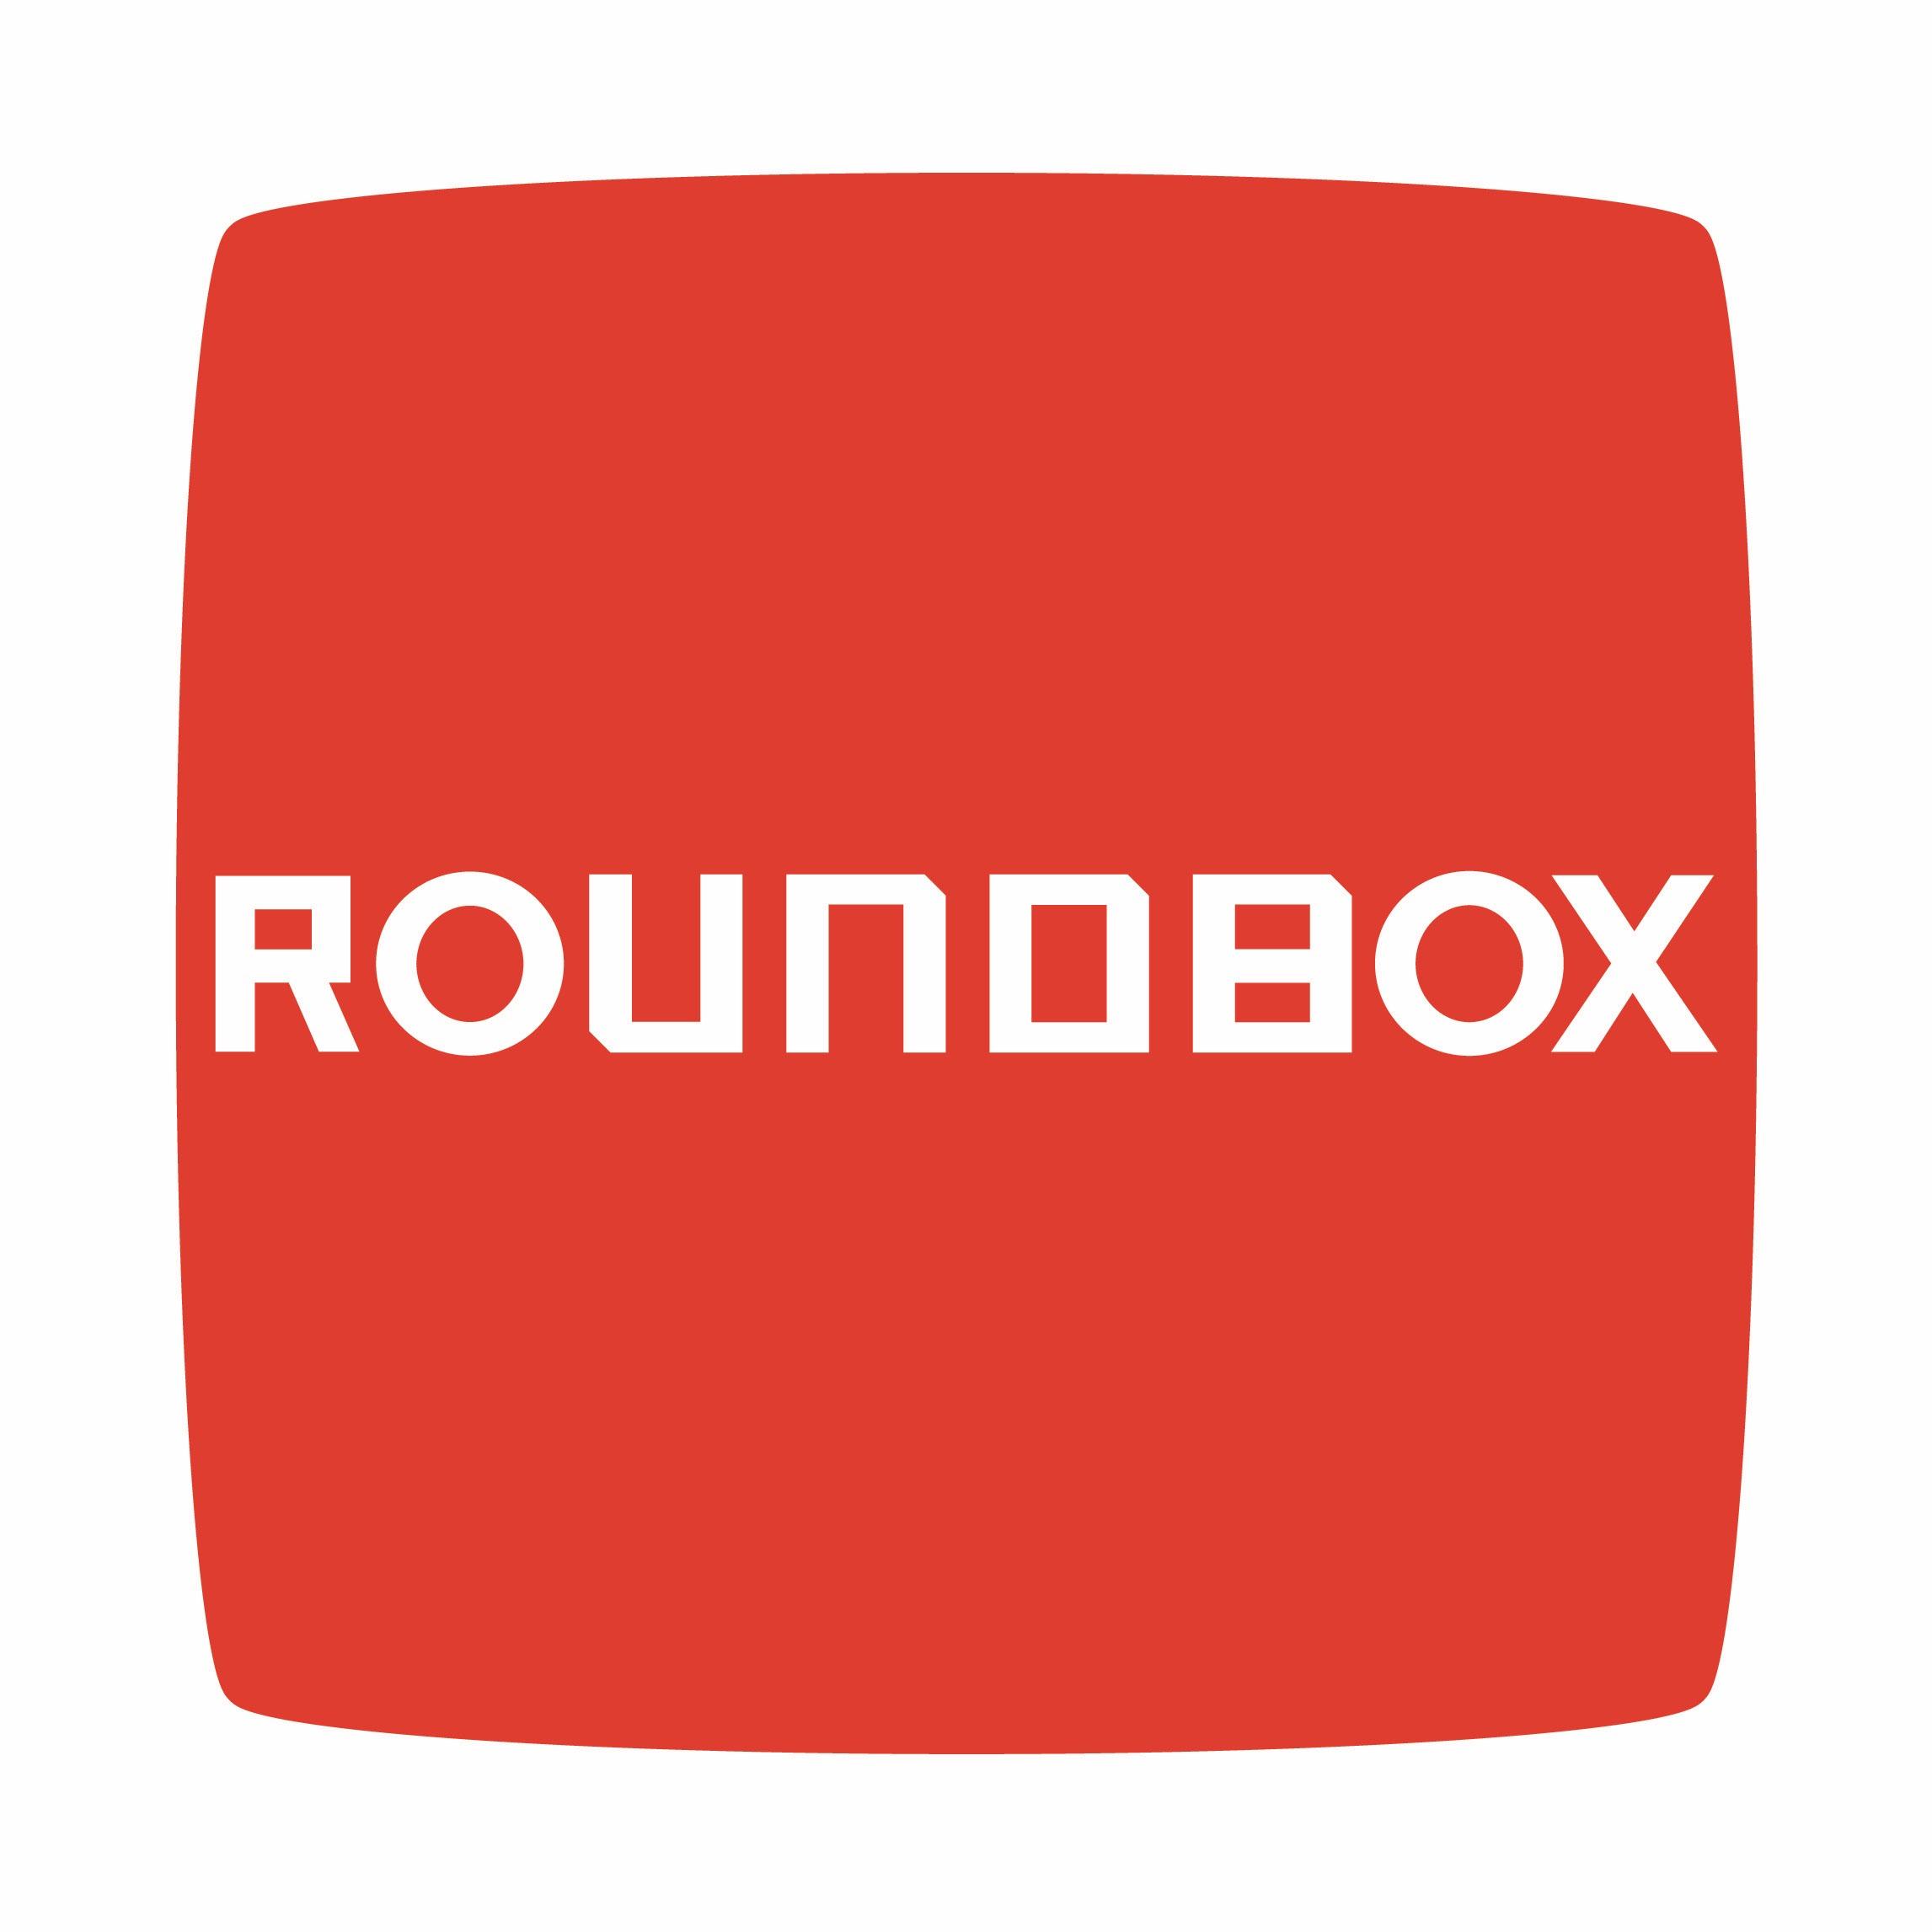 Roundbox Fitness Logo